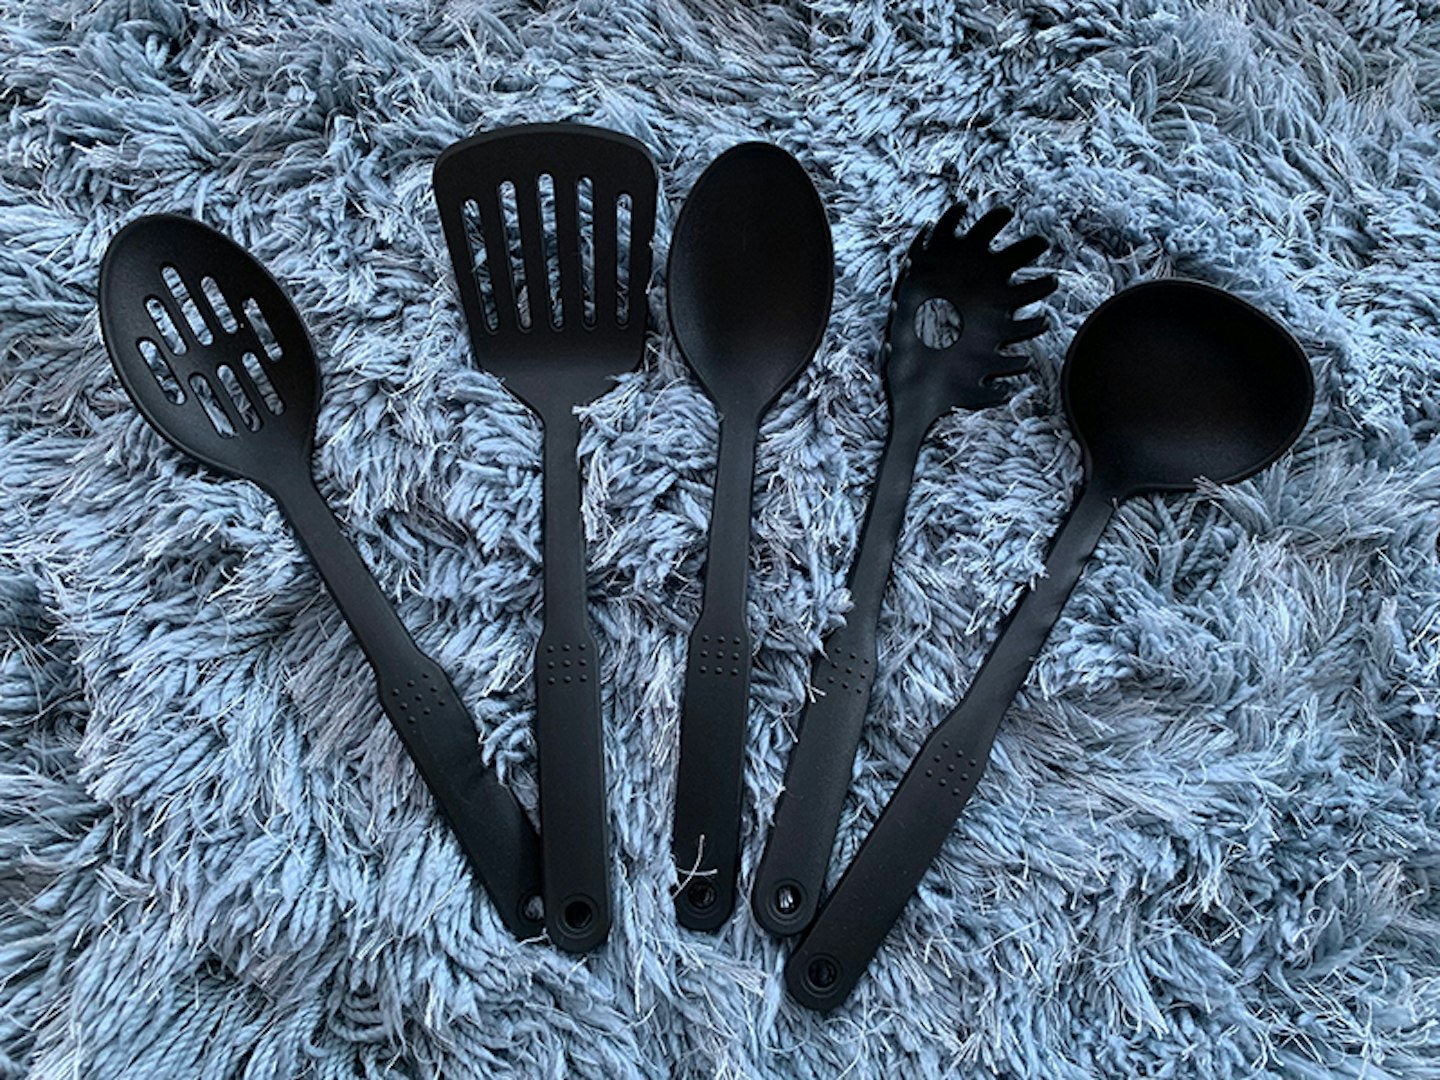 Basics Non-Stick Cookware 15-Piece Set, Pots, Pans and Utensils,  Black